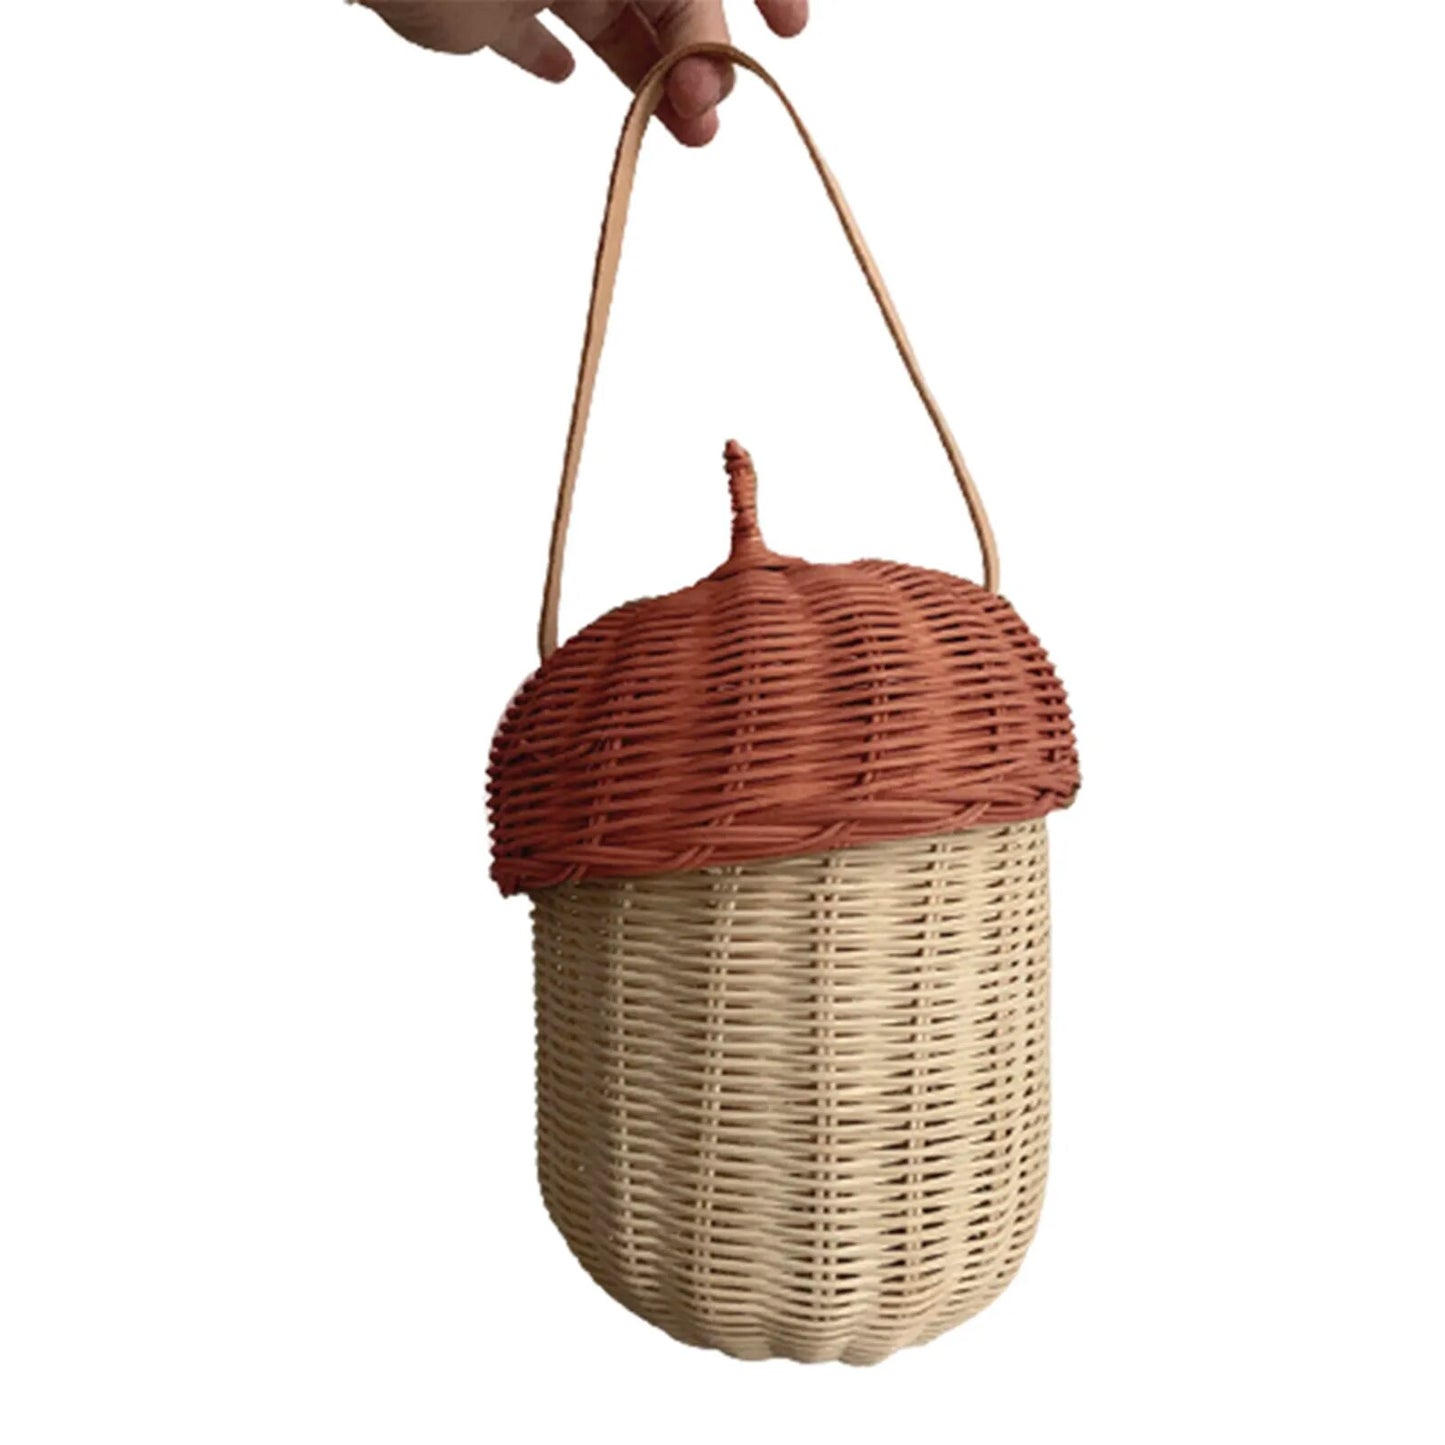 Rattan Pinecone Picnic Basket Handmade Woven Storage Bag Cute Portable Rattan Basket Handbag Wicker Basket For Kids Photo Props